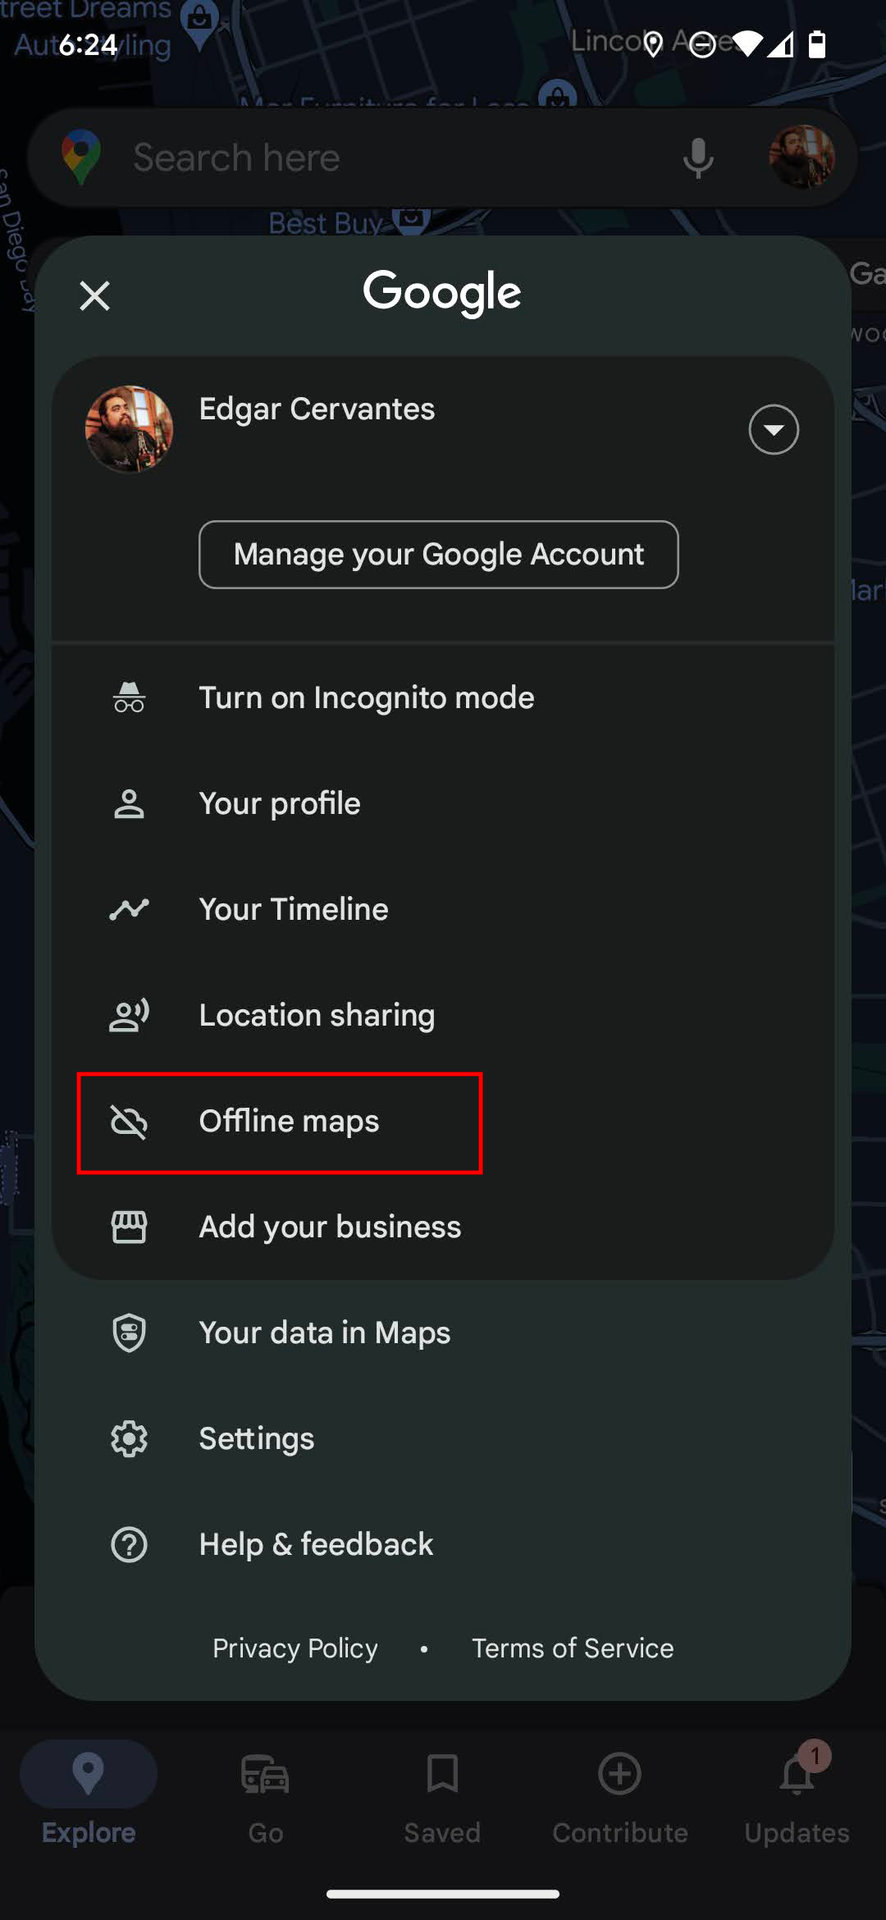 How to delete offline maps in Google Maps 2